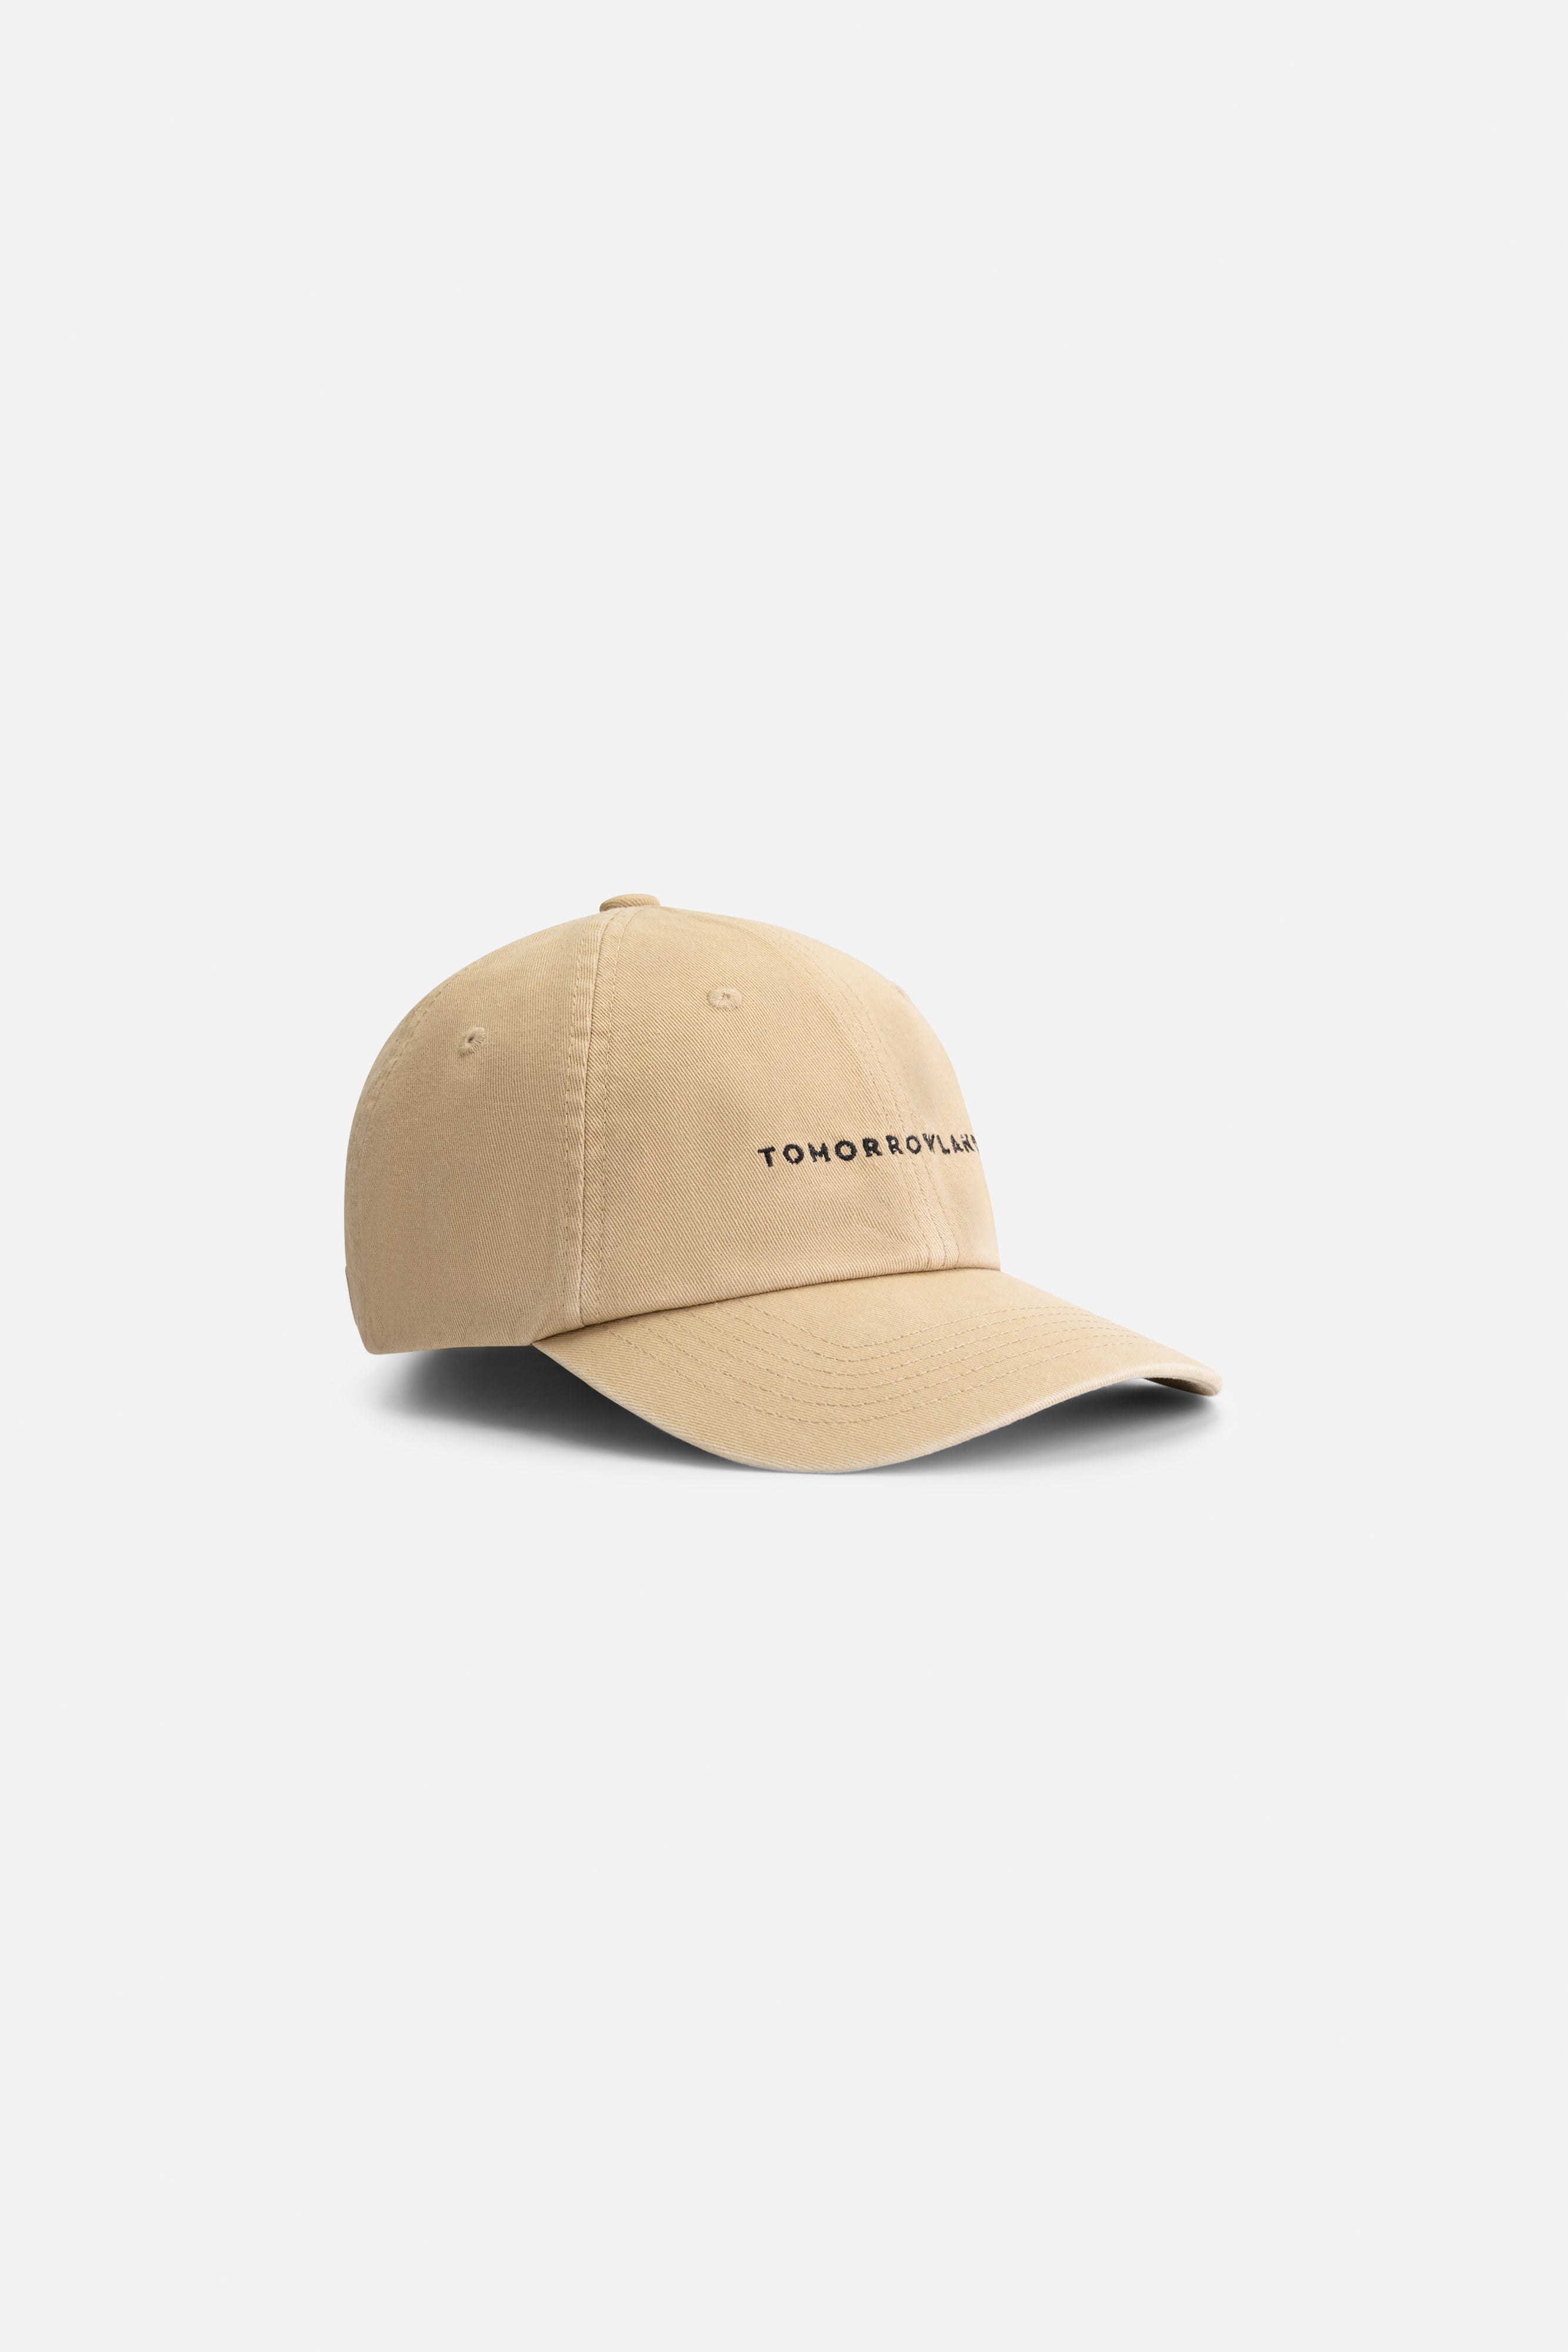 TOMORROWLAND CAP – Tomorrowland Store